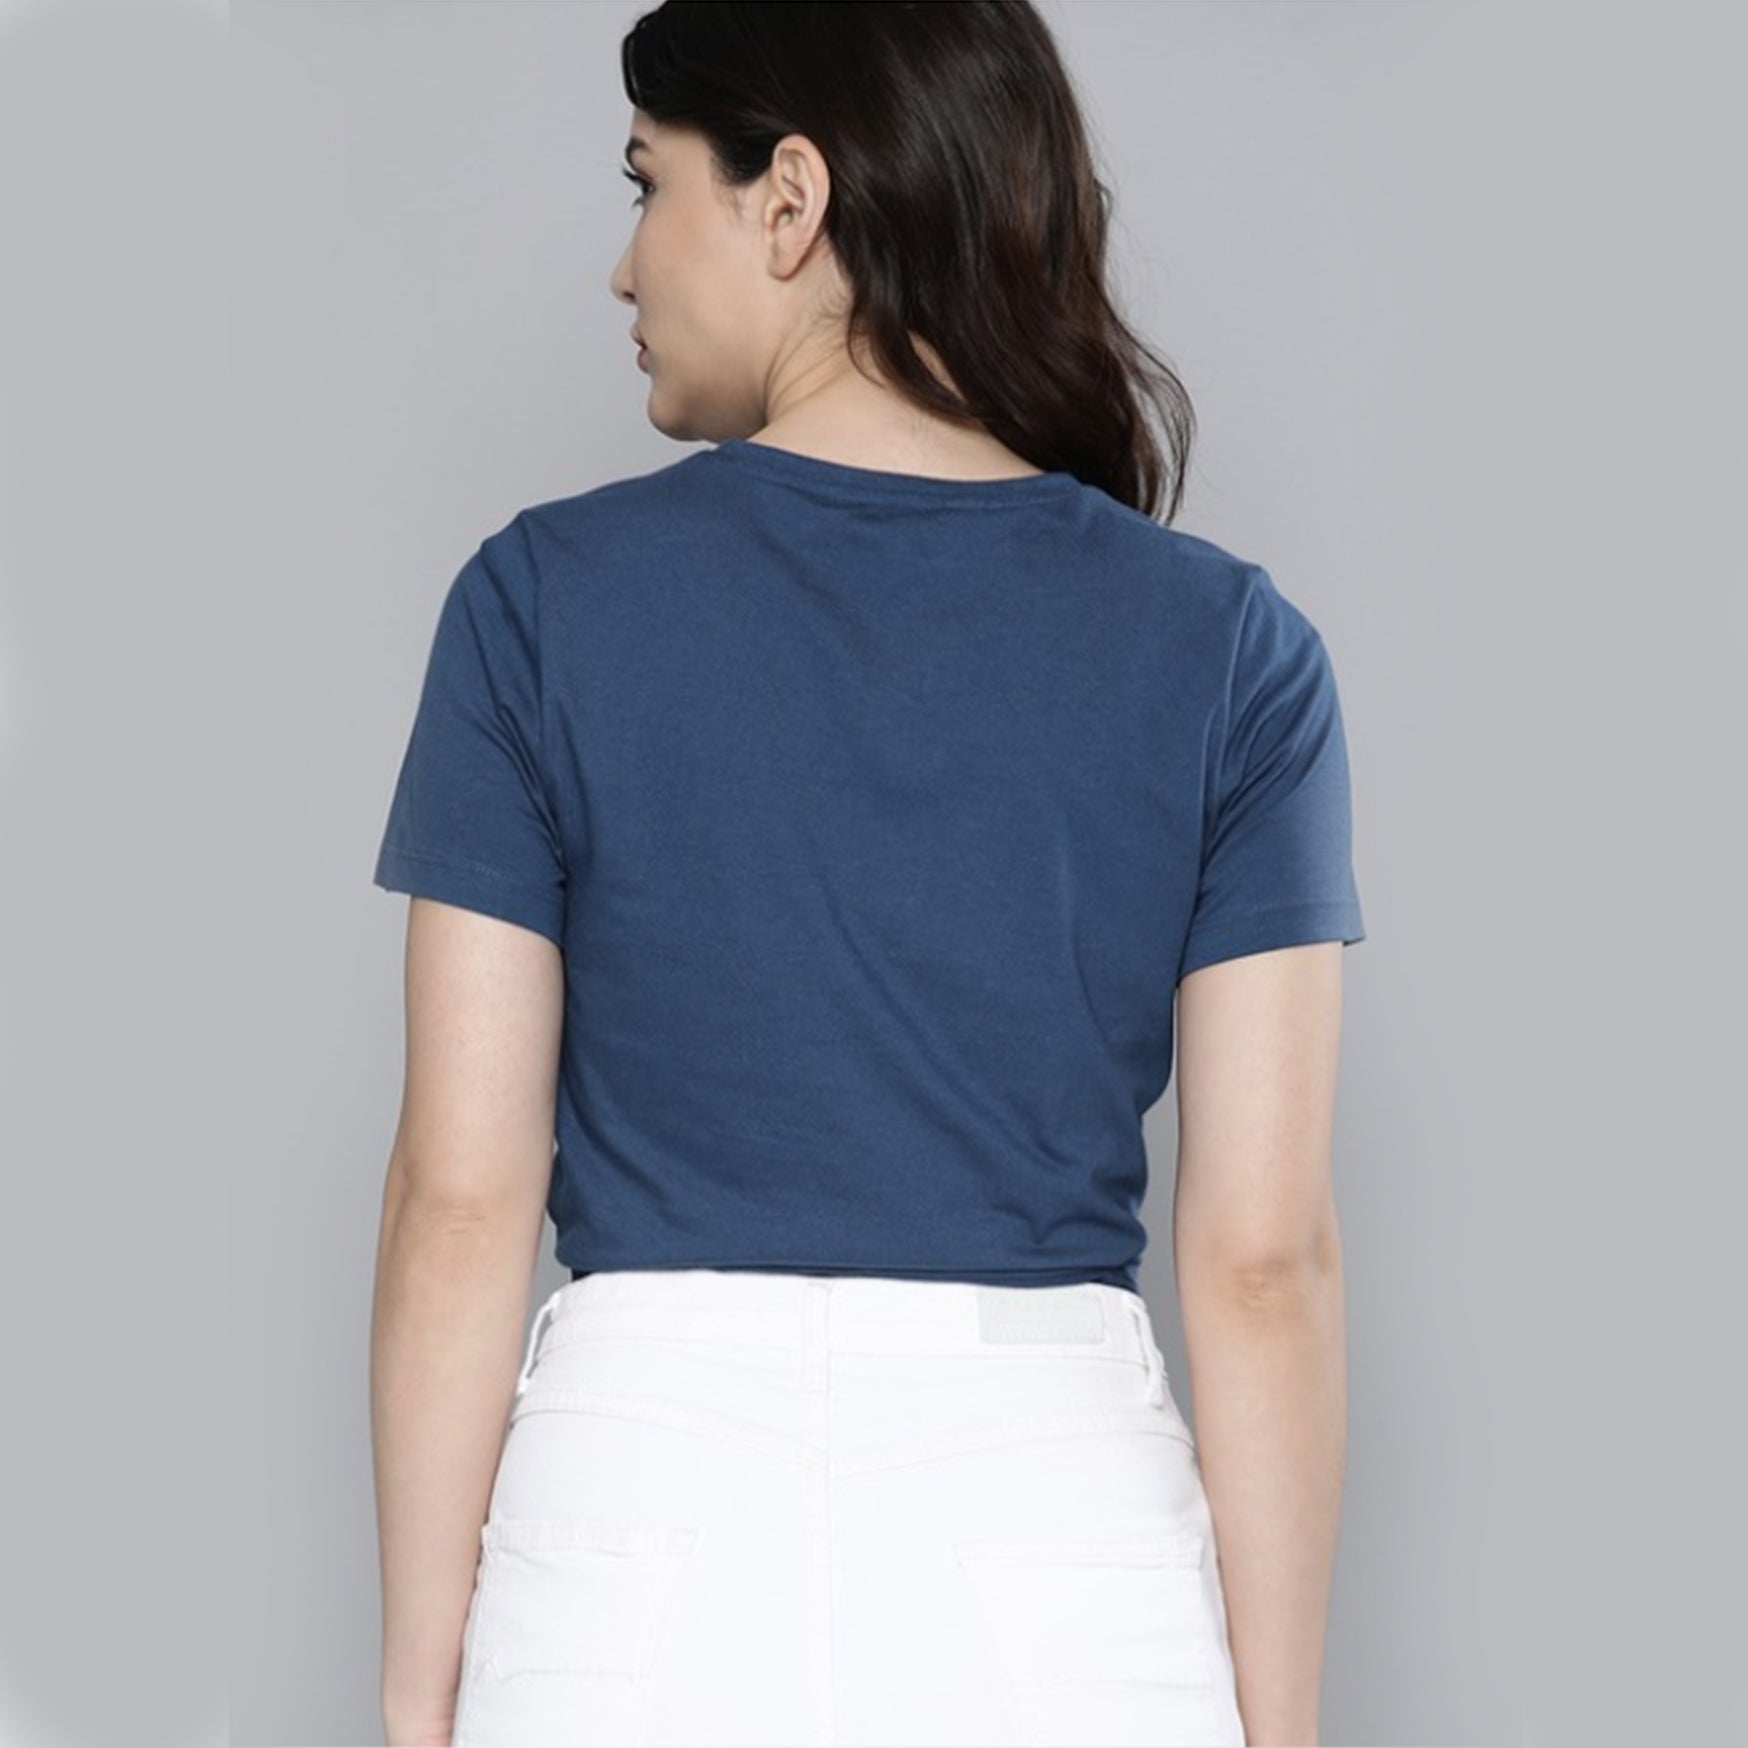 Women Navy Blue Typography Printed Round Neck T-shirt